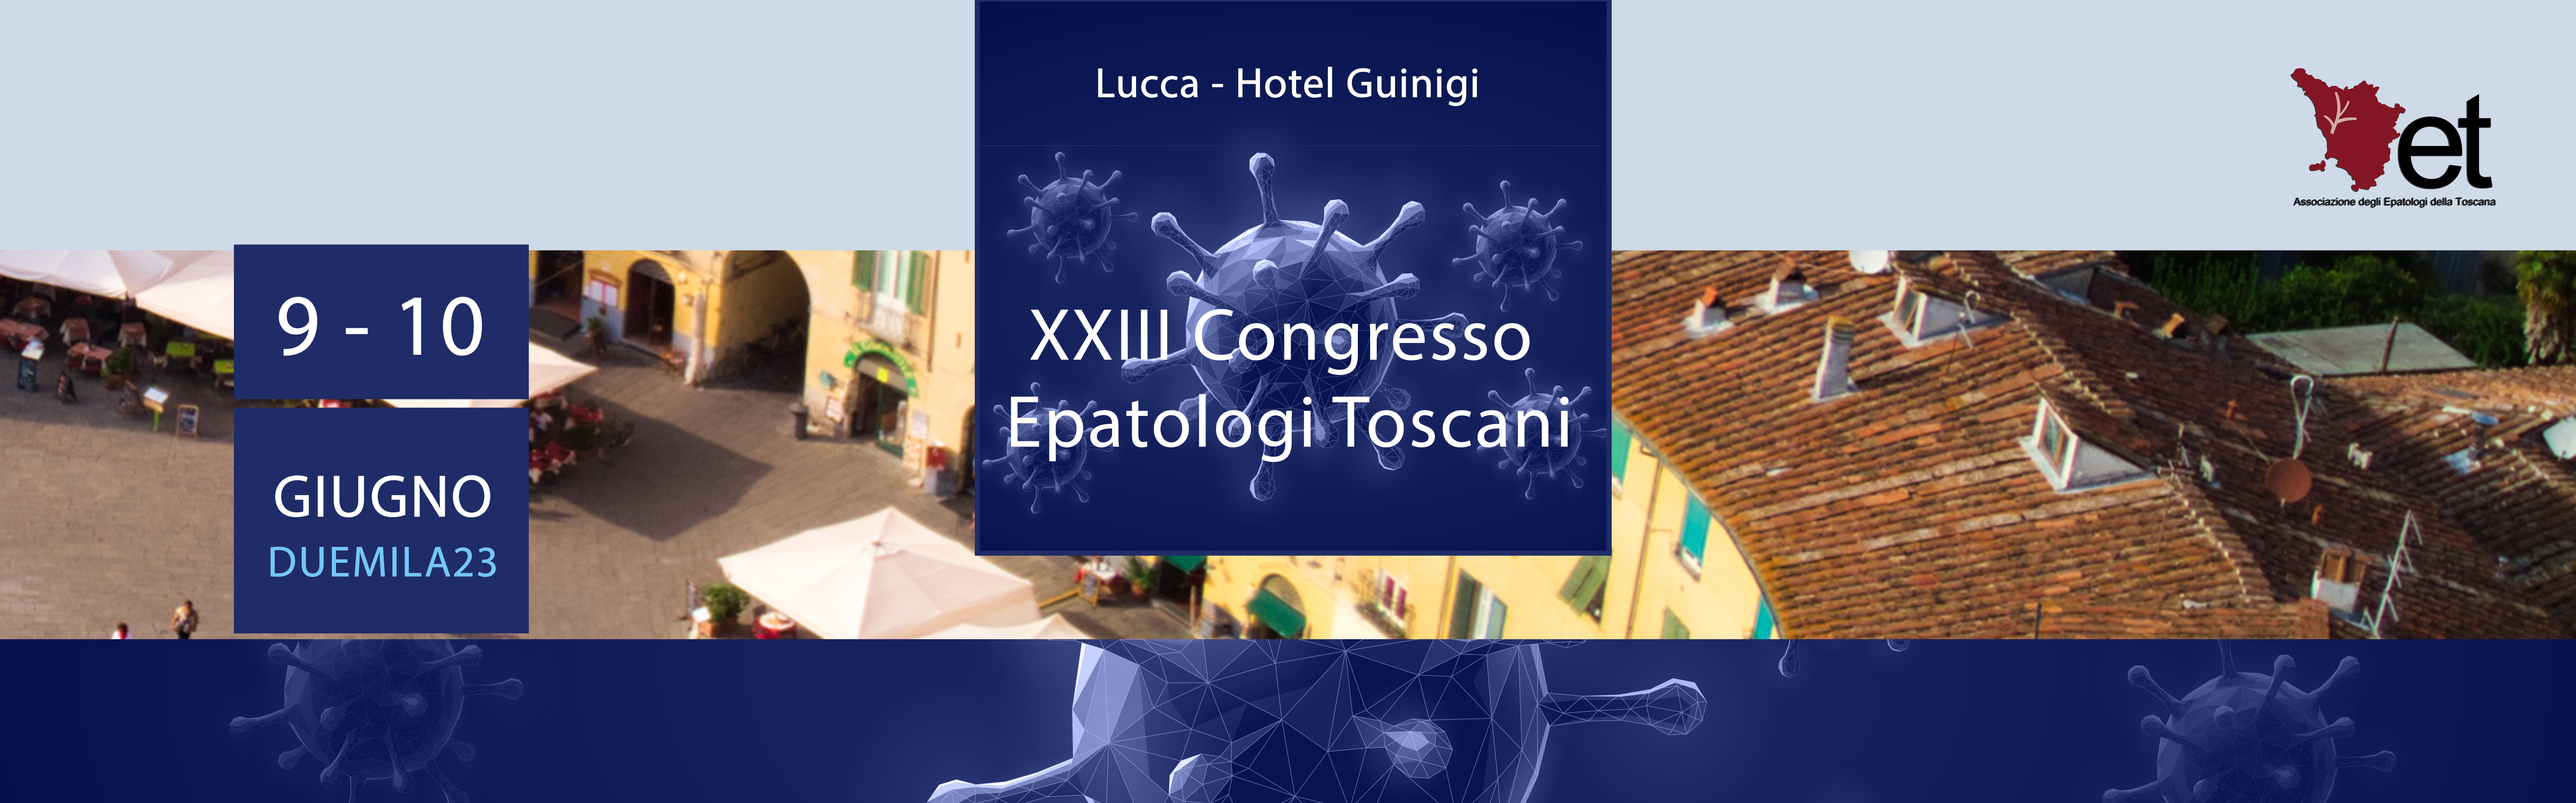 XXIII Congresso Epatologi Toscani